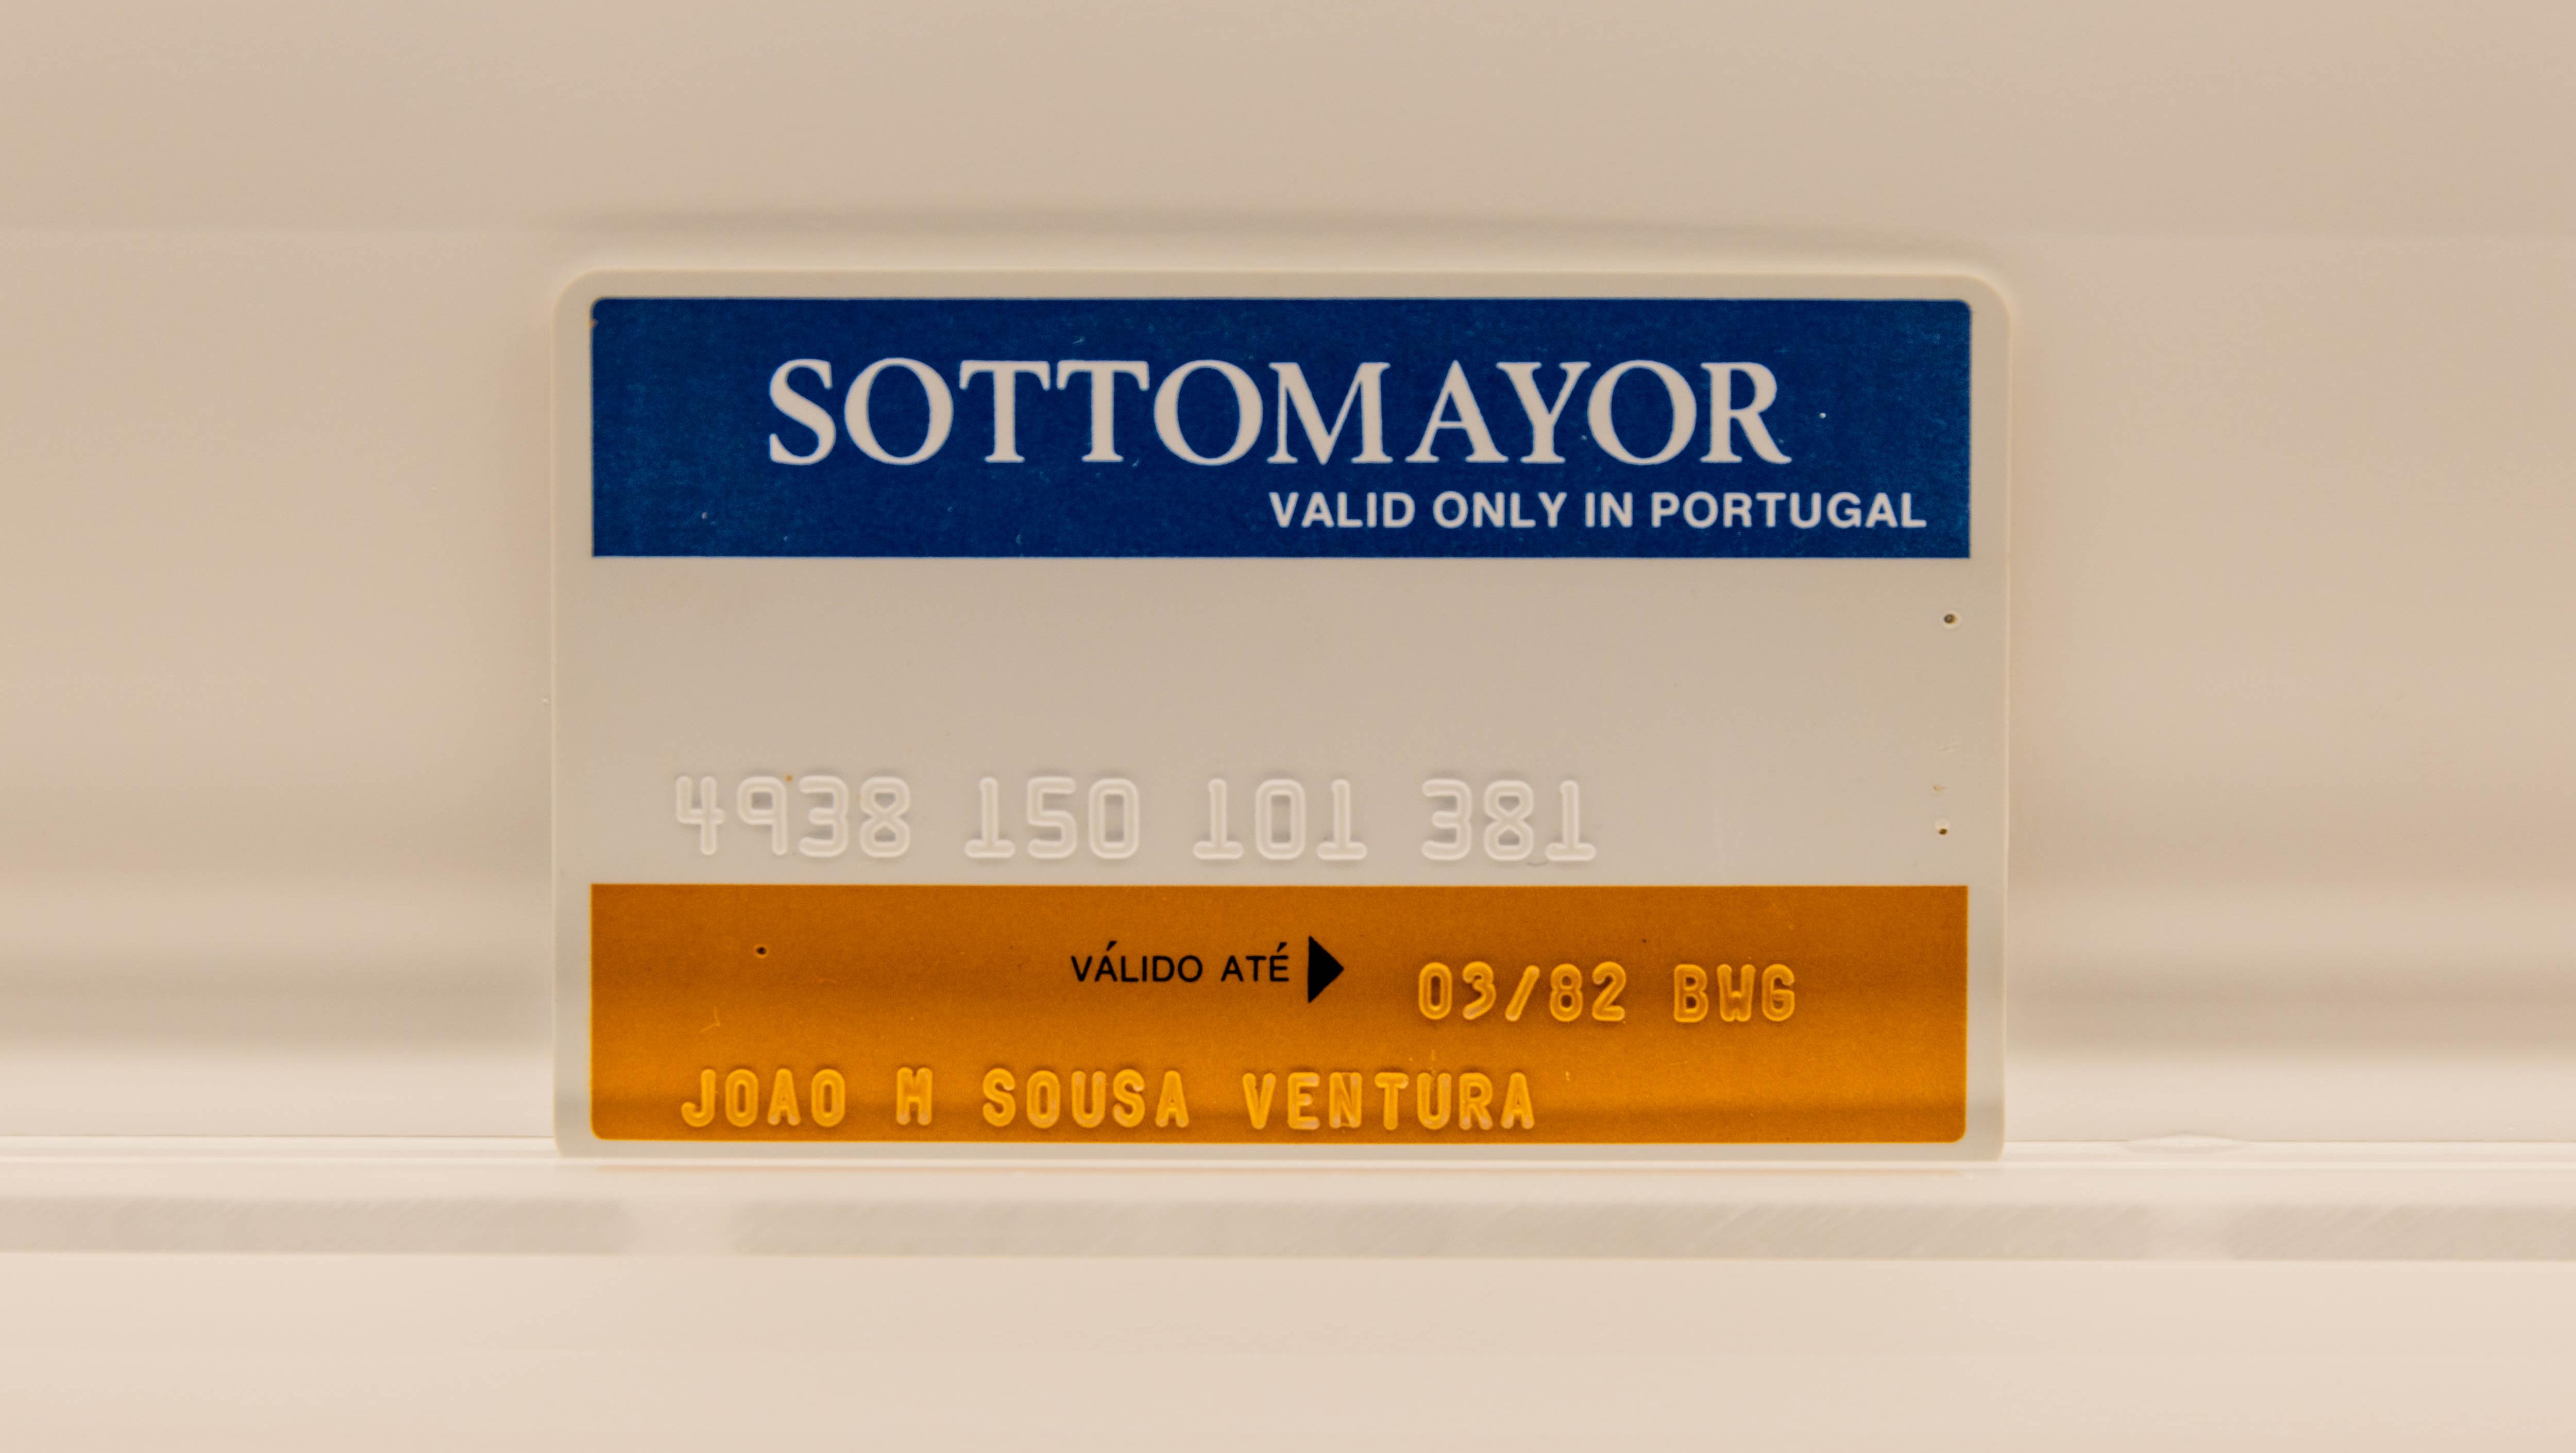 Cartão bancário SottoMayor "Valid only in Portugal"